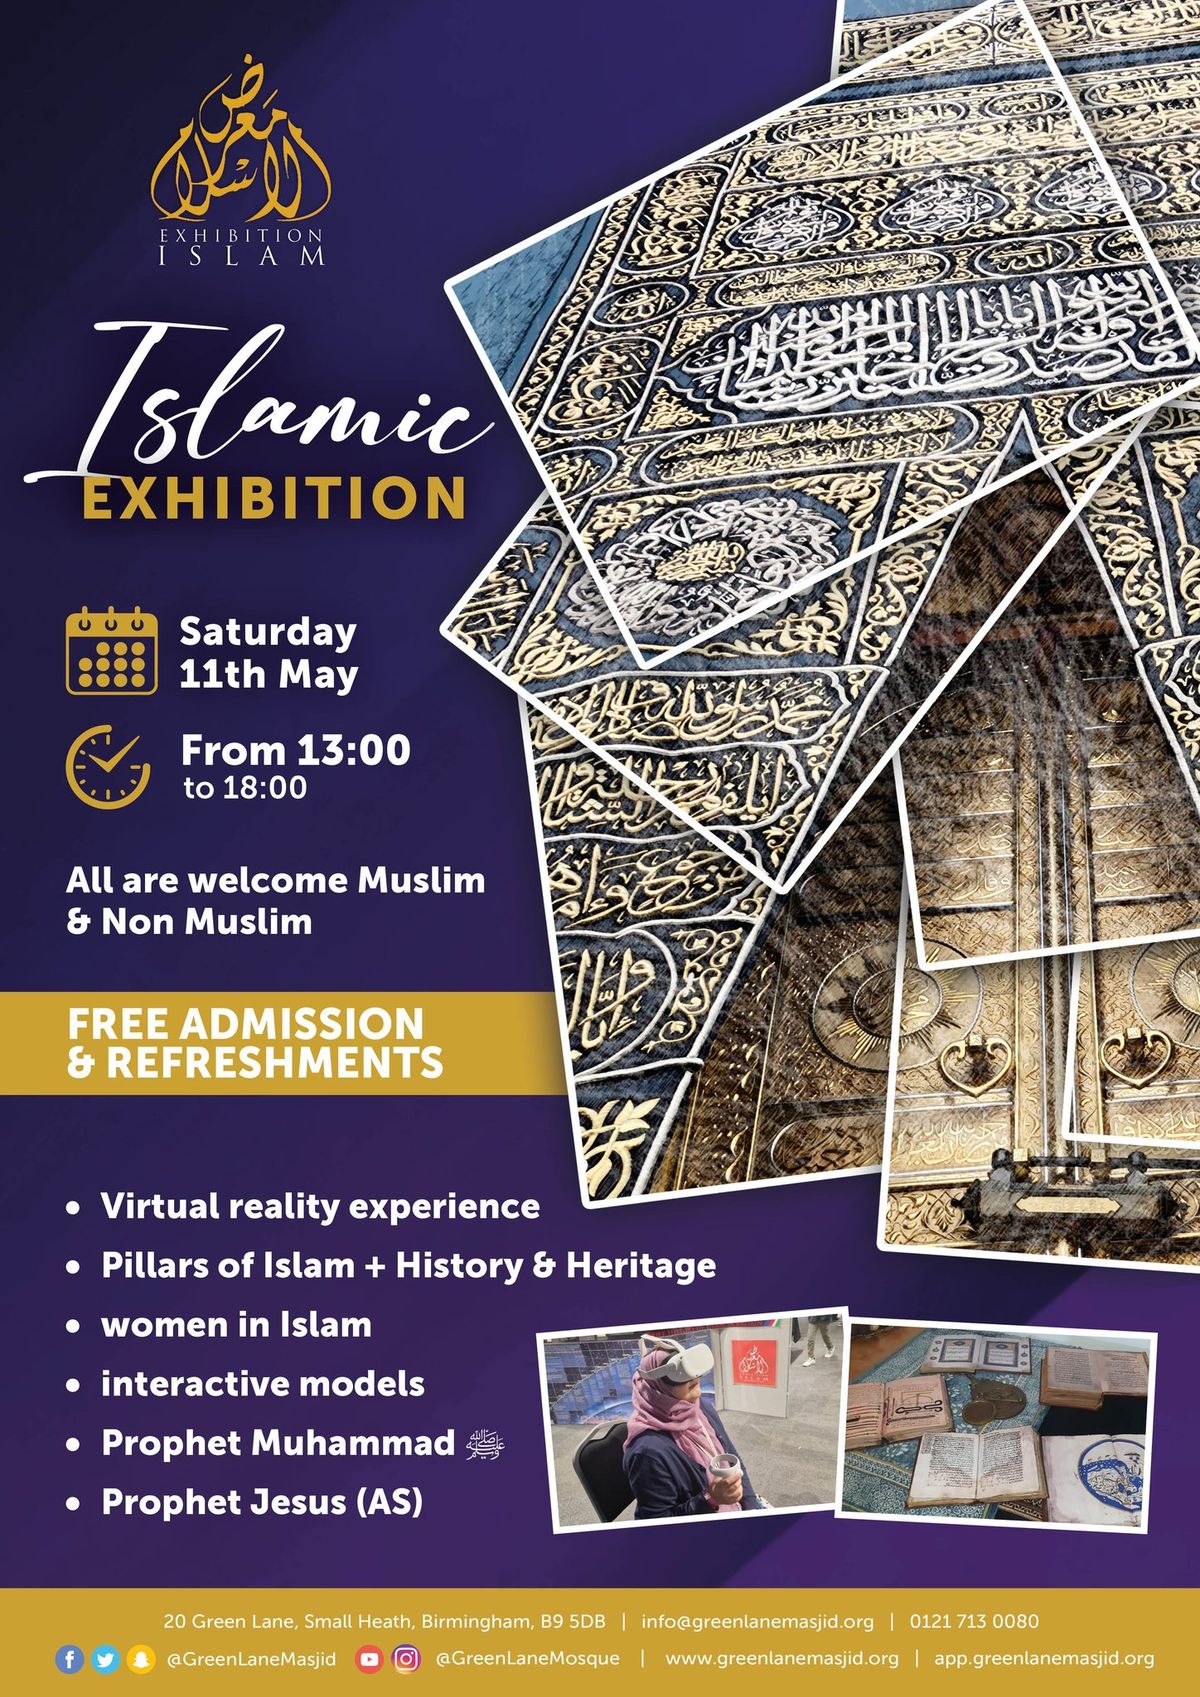 Journey Through Islam's Heritage & Culture